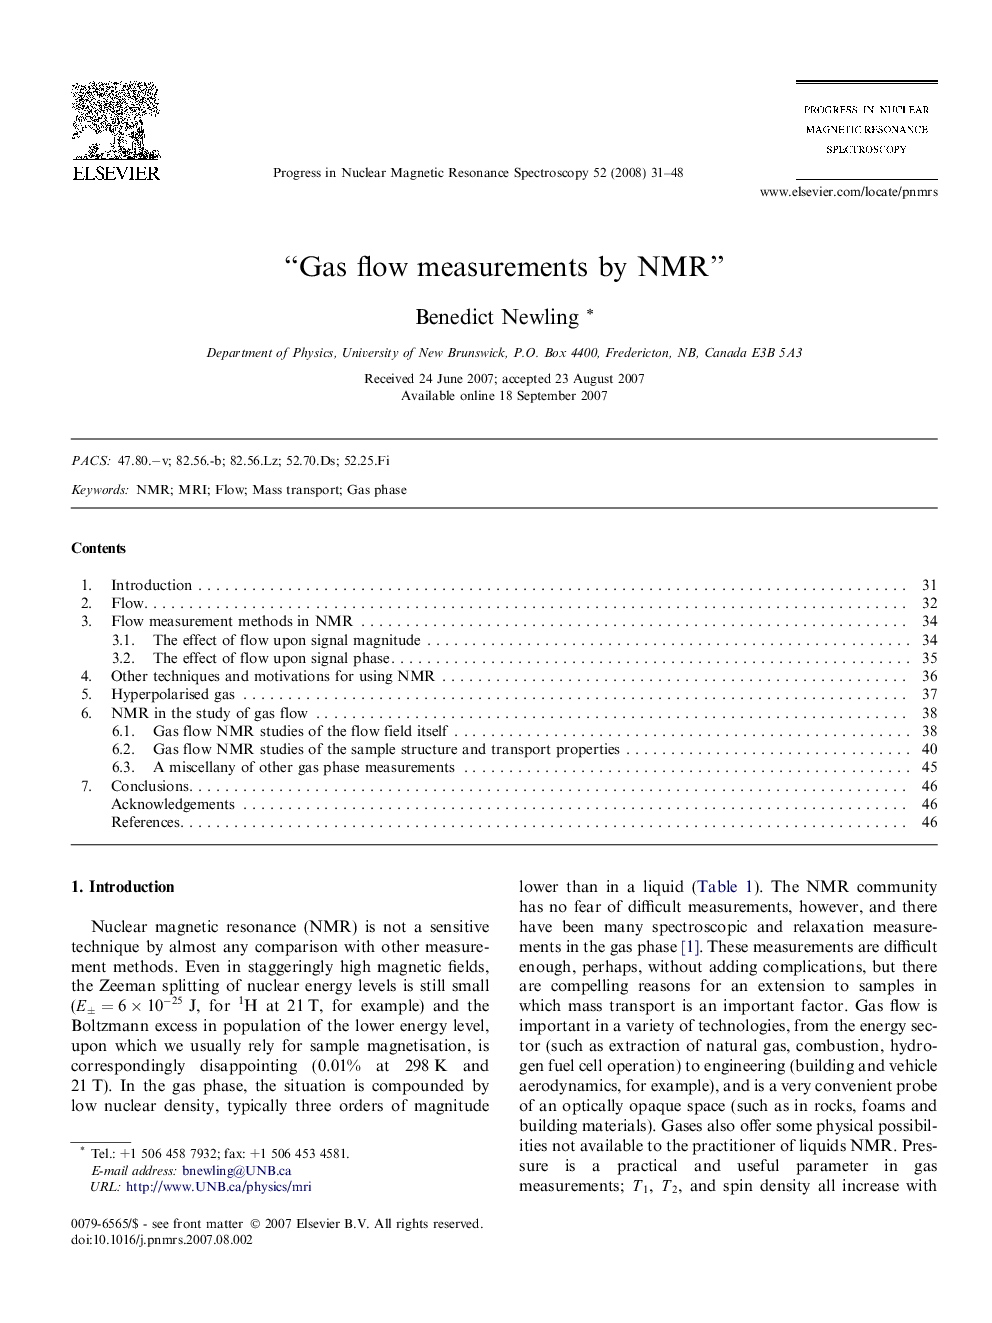 Gas flow measurements by NMR